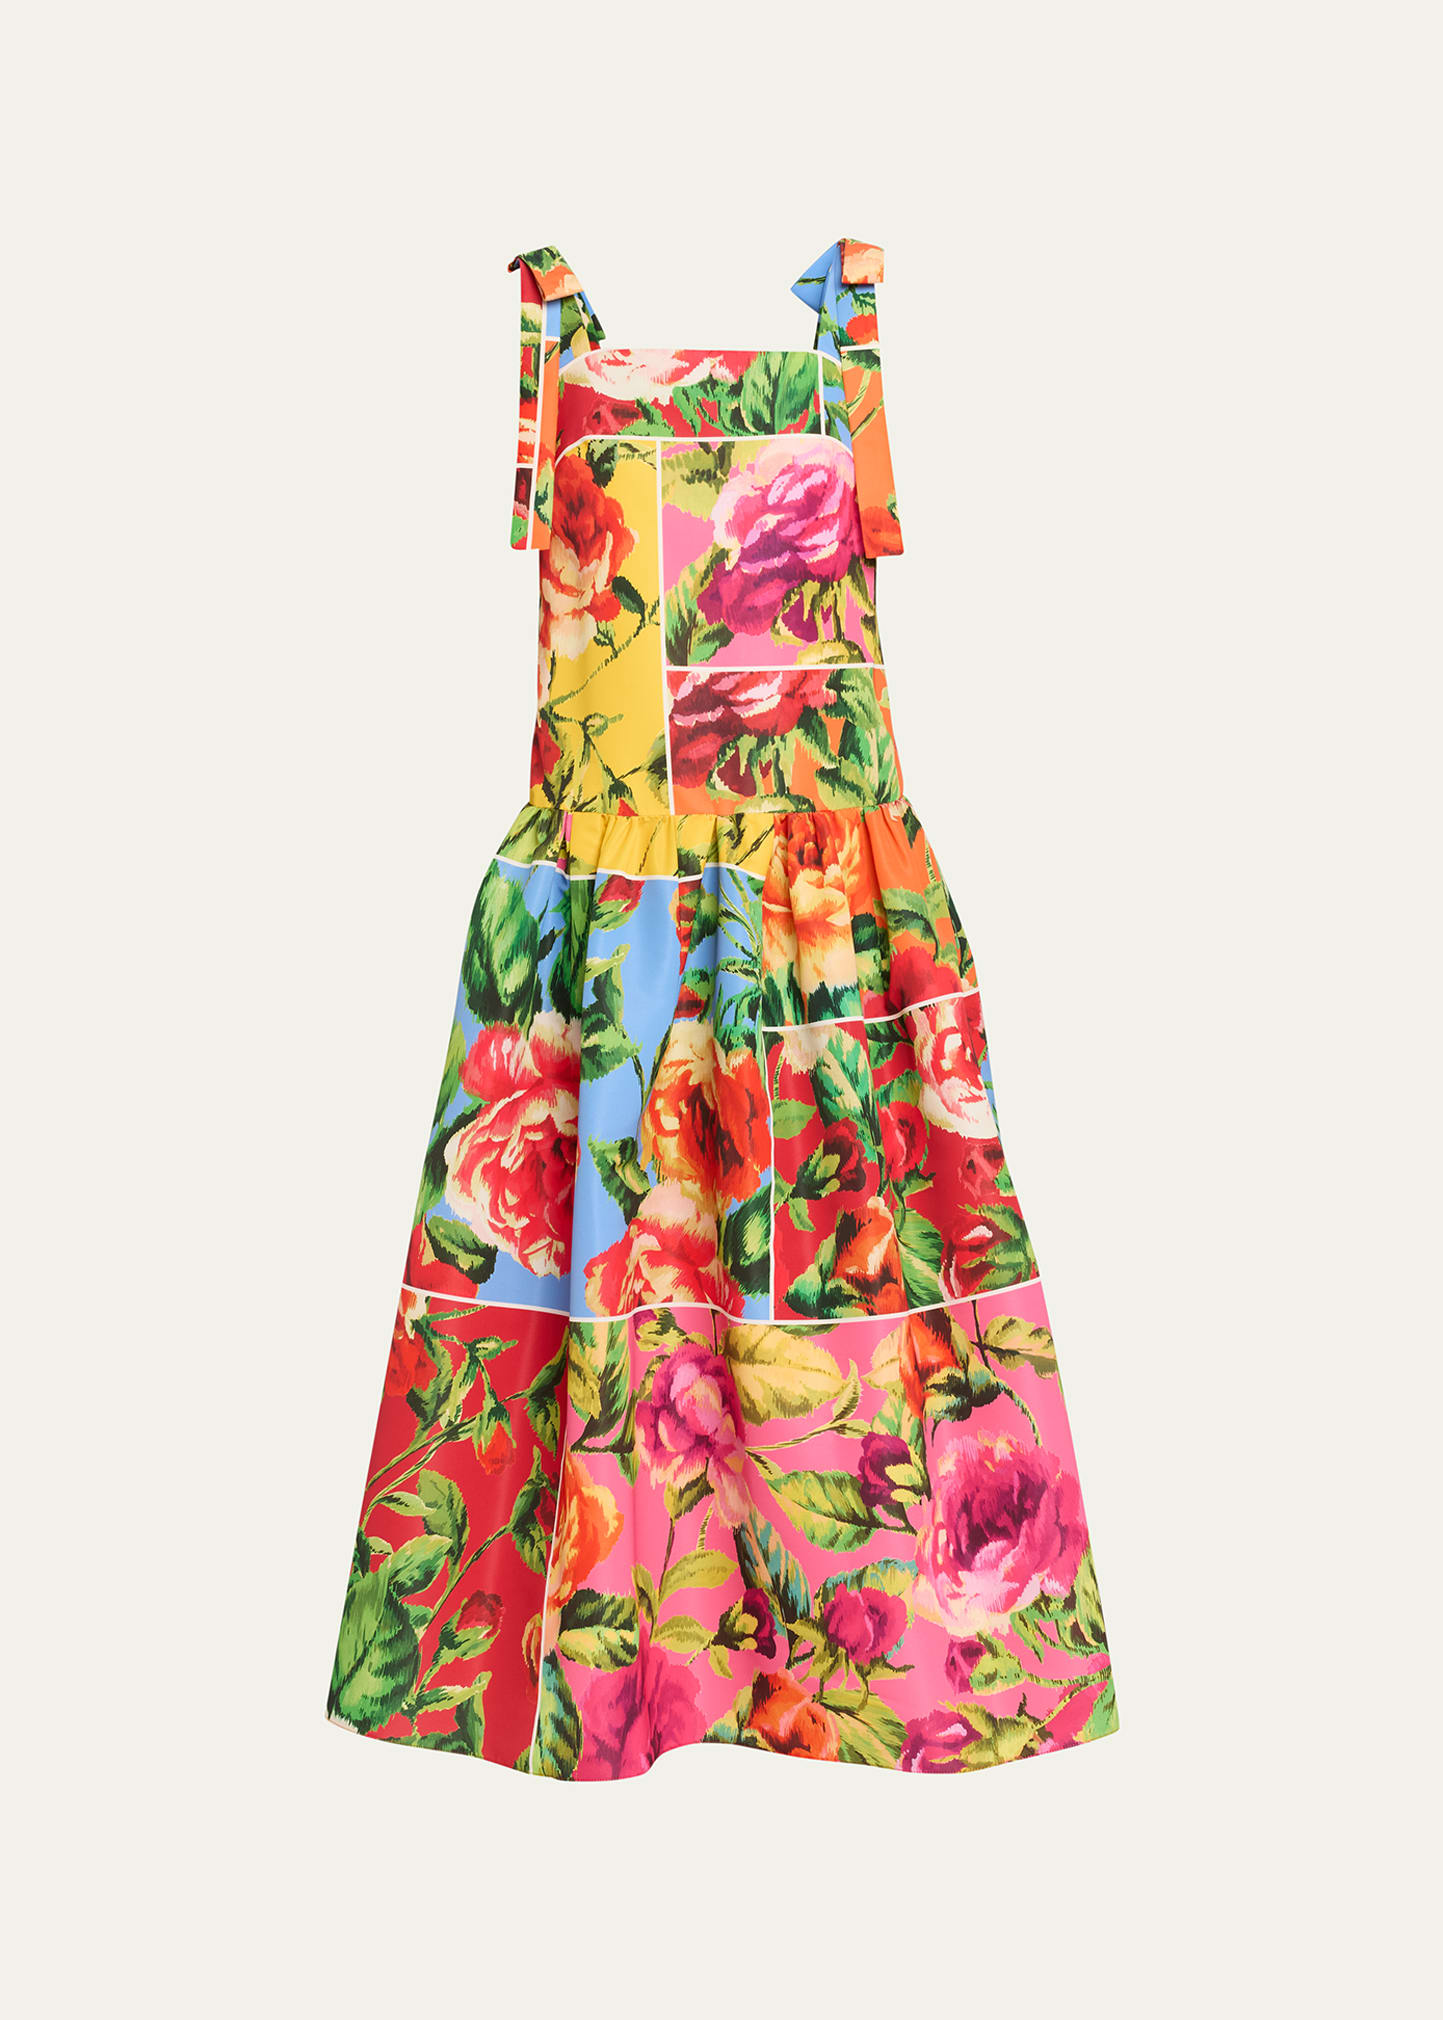 Carolina Herrera Drop Waist Floral Print Dress with Bow Straps | Bergdorf Goodman